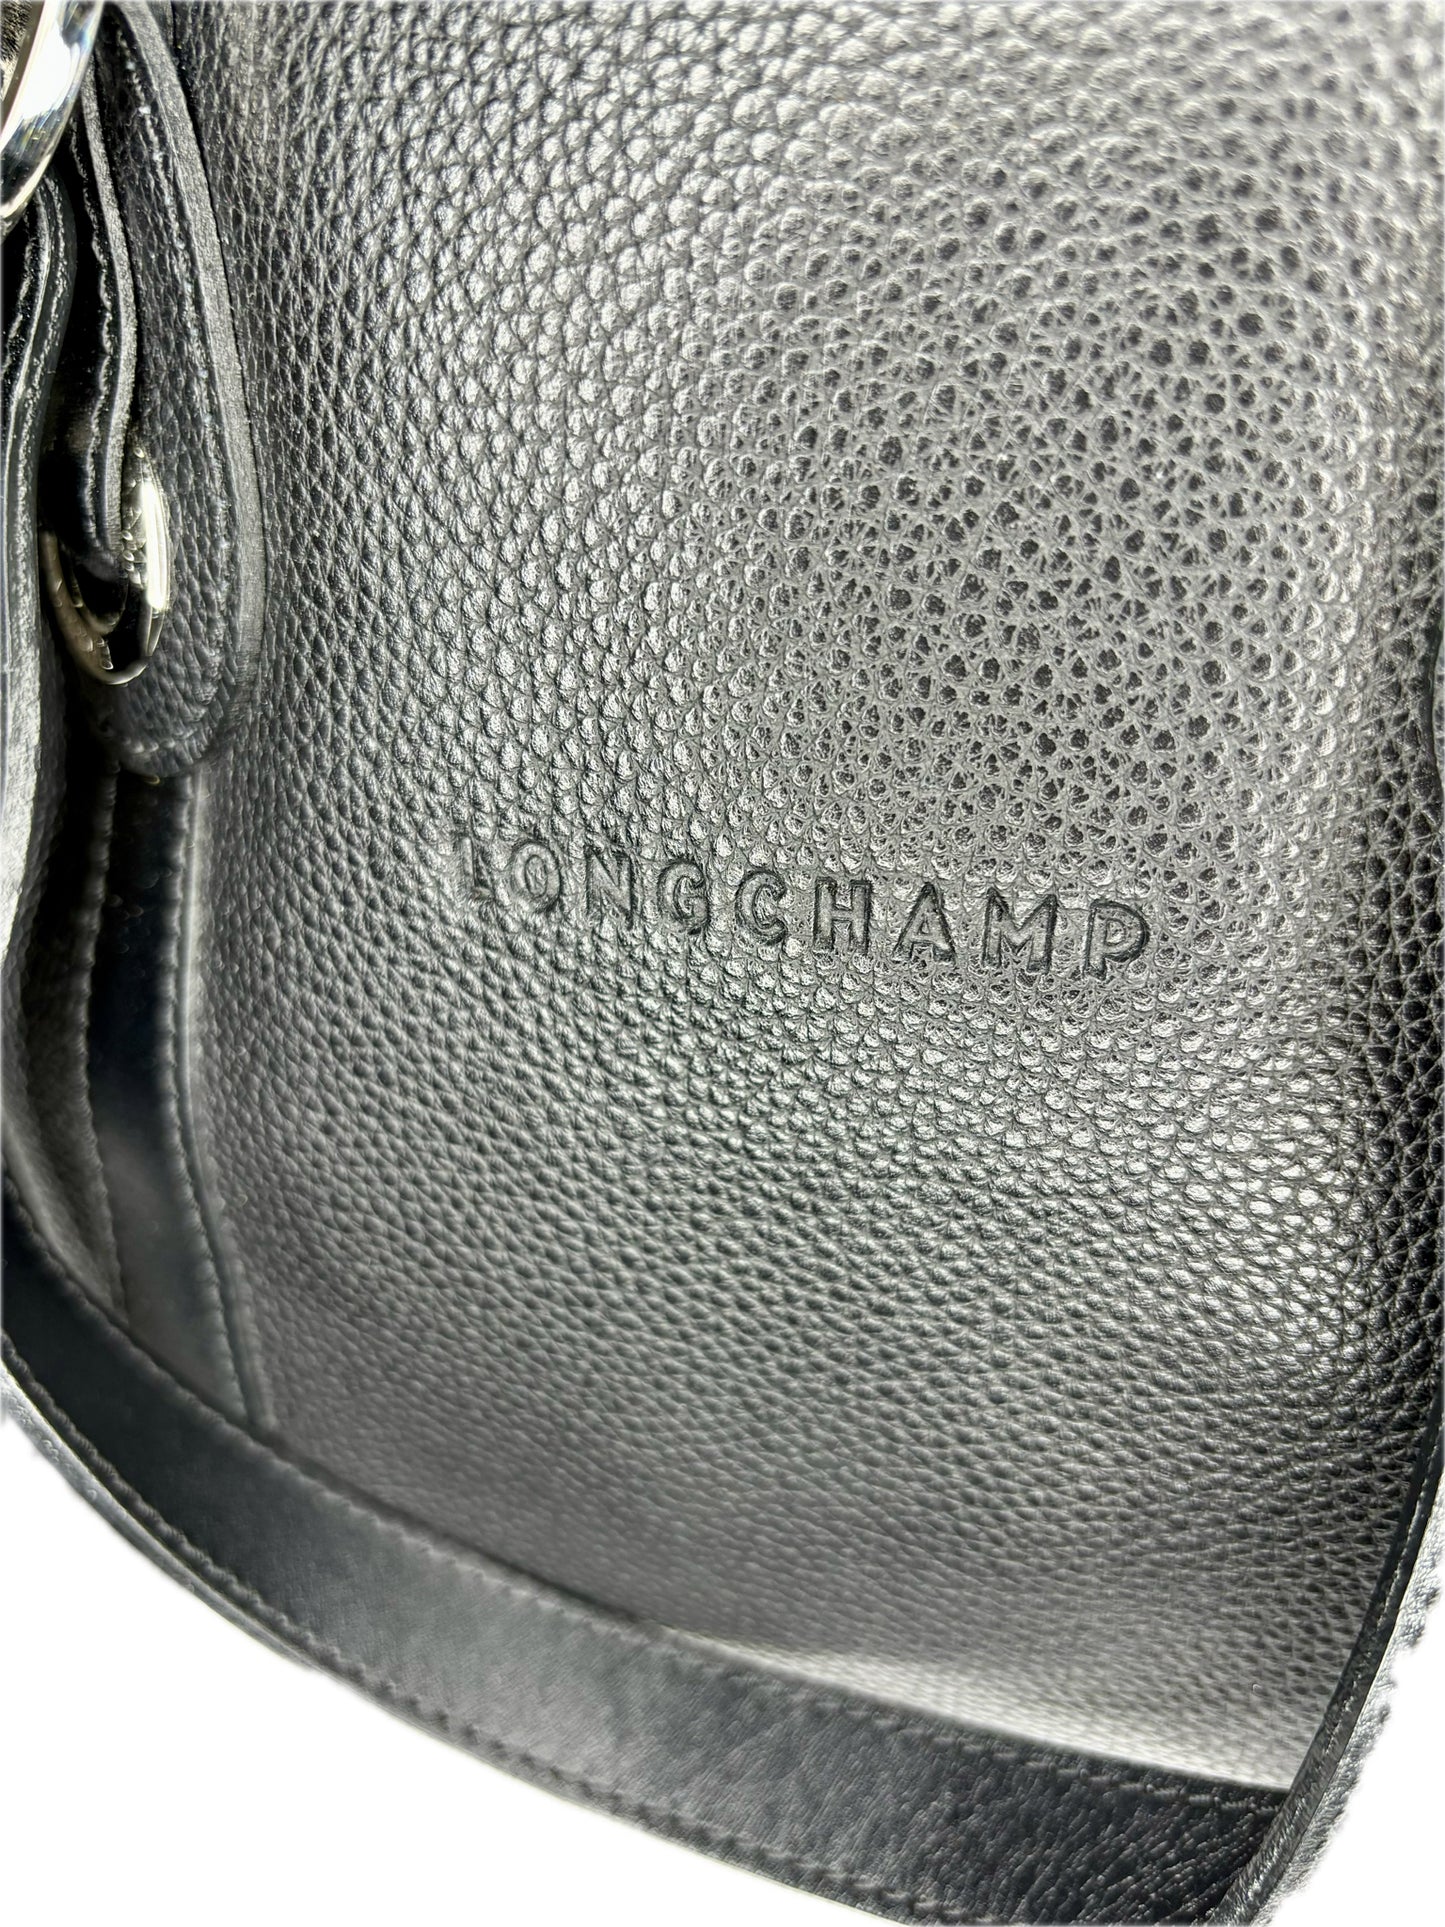 Leather Longchamp Purse